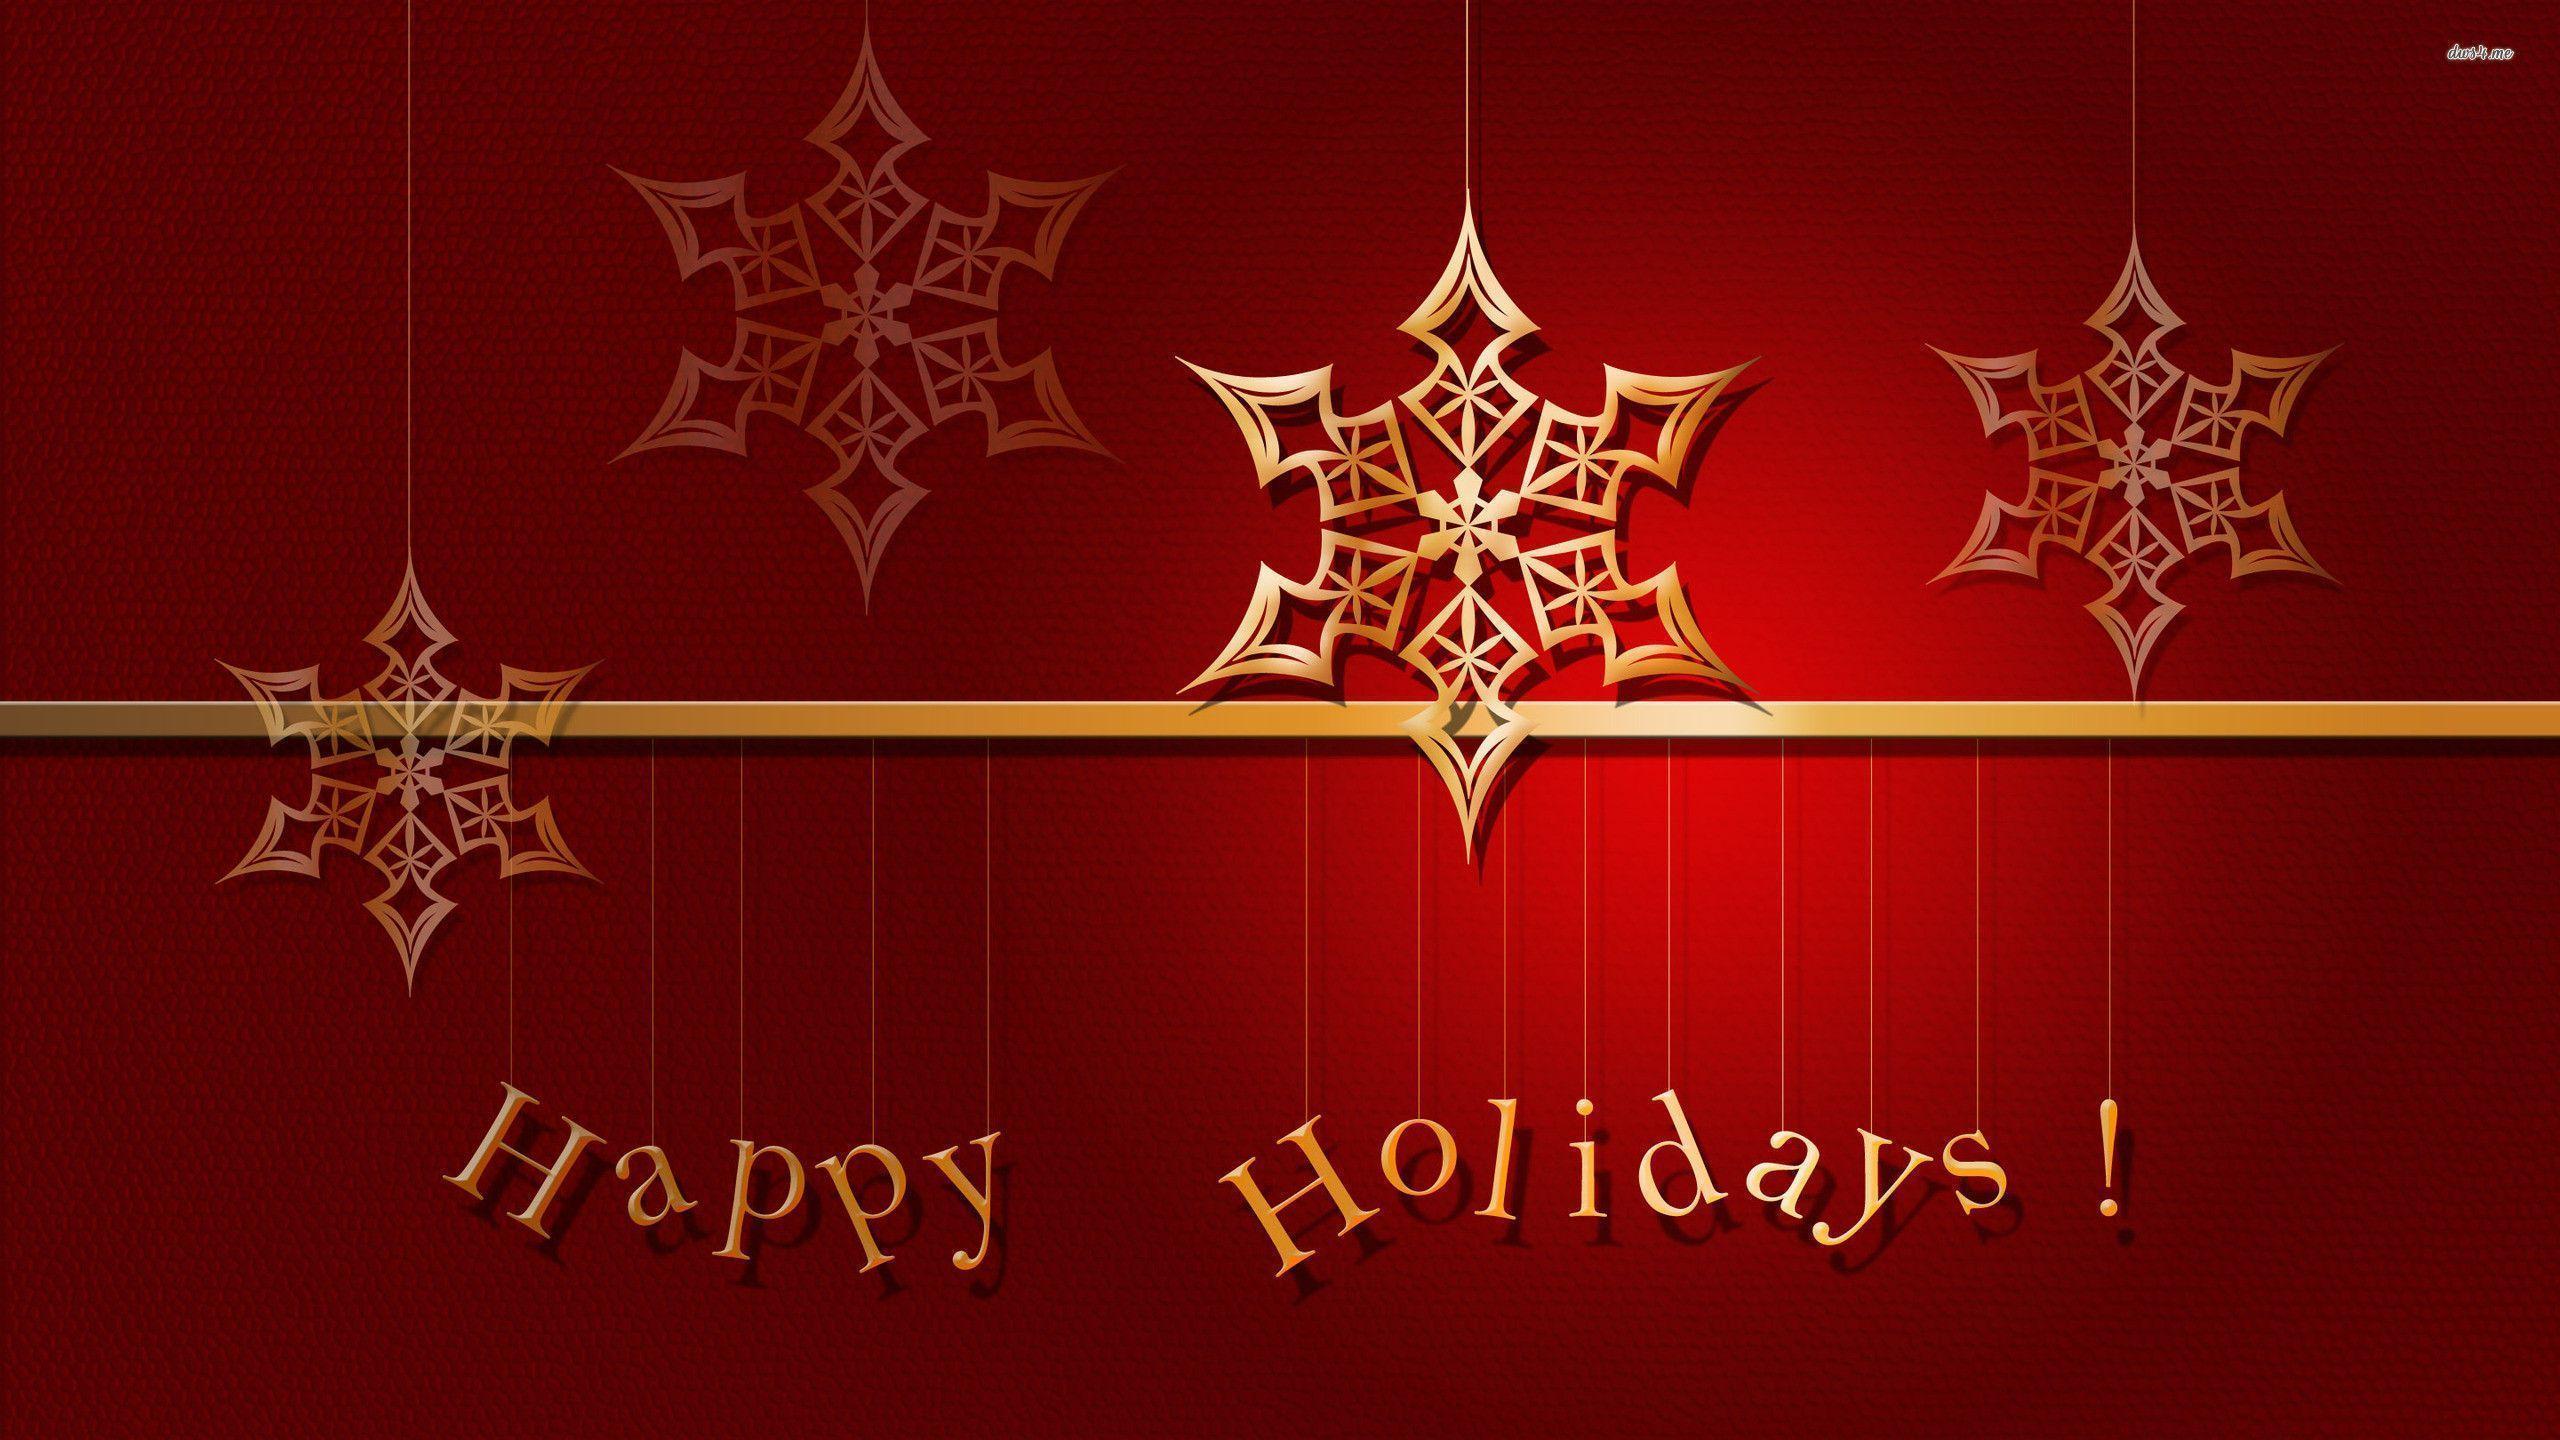 Happy Holidays Wallpaper Image 6 HD Wallpapercom